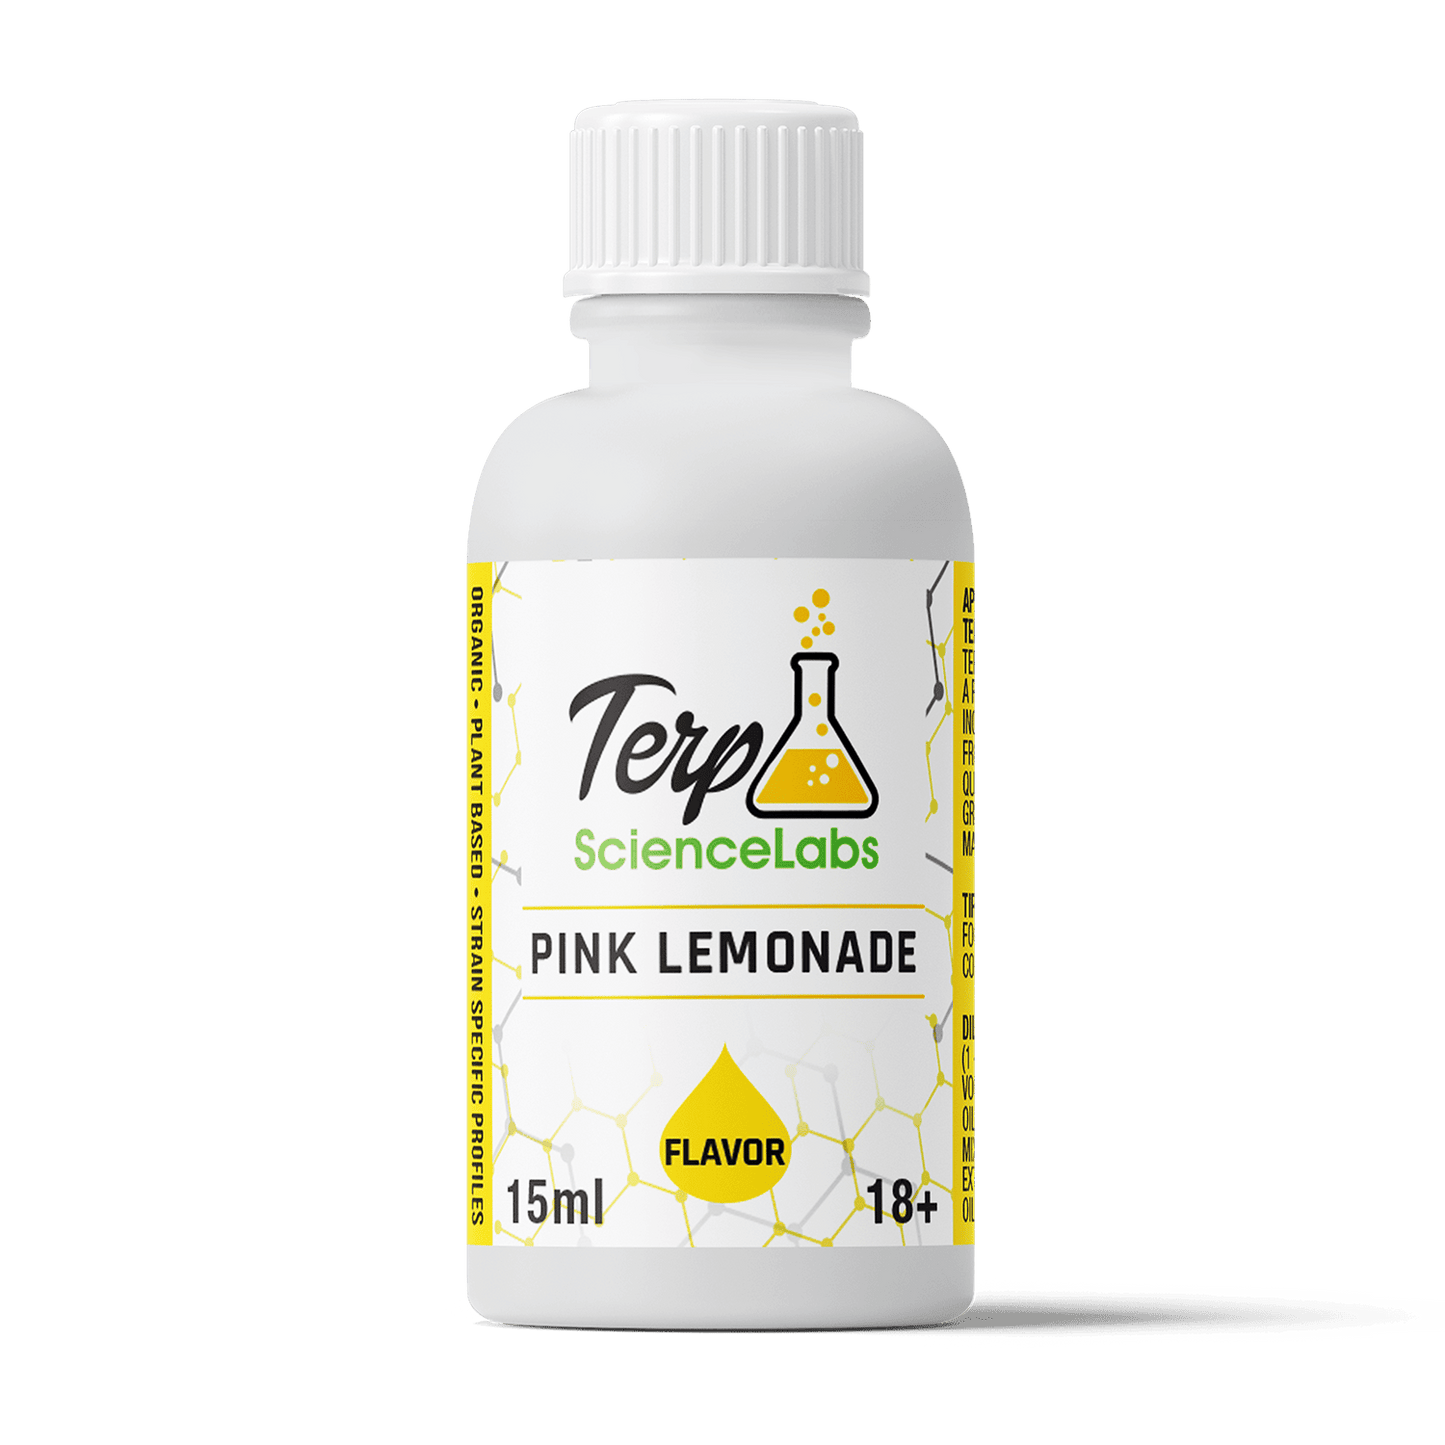 Pink Lemonade Flavor Profile